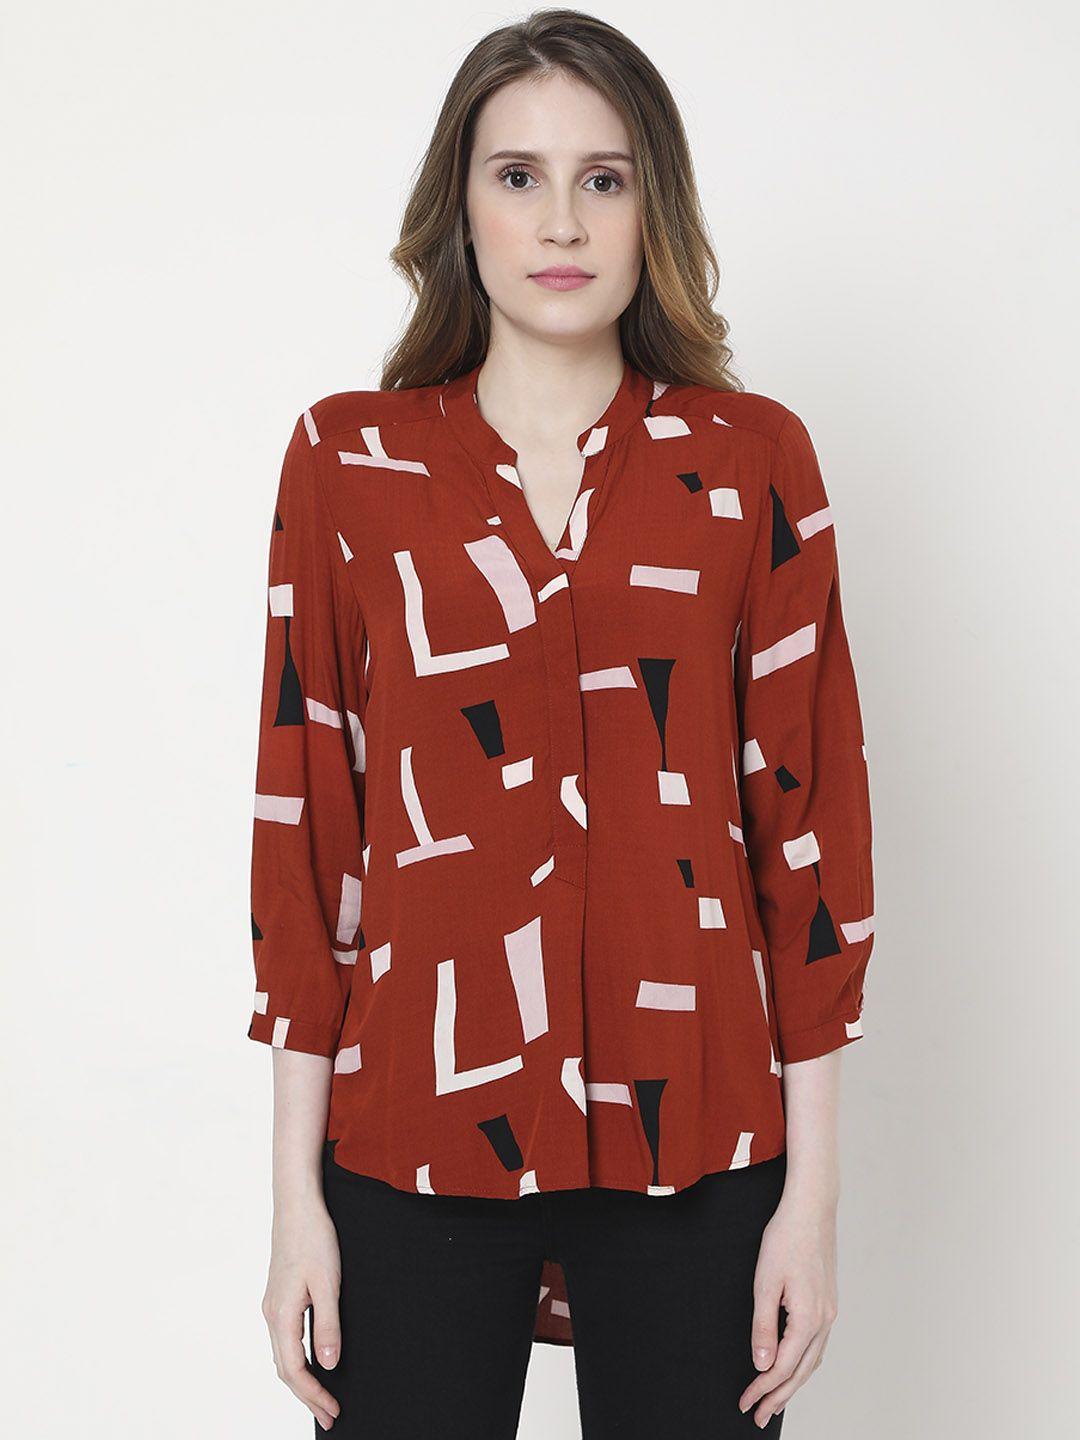 vero moda red geometric mandarin collar roll-up sleeves shirt style top